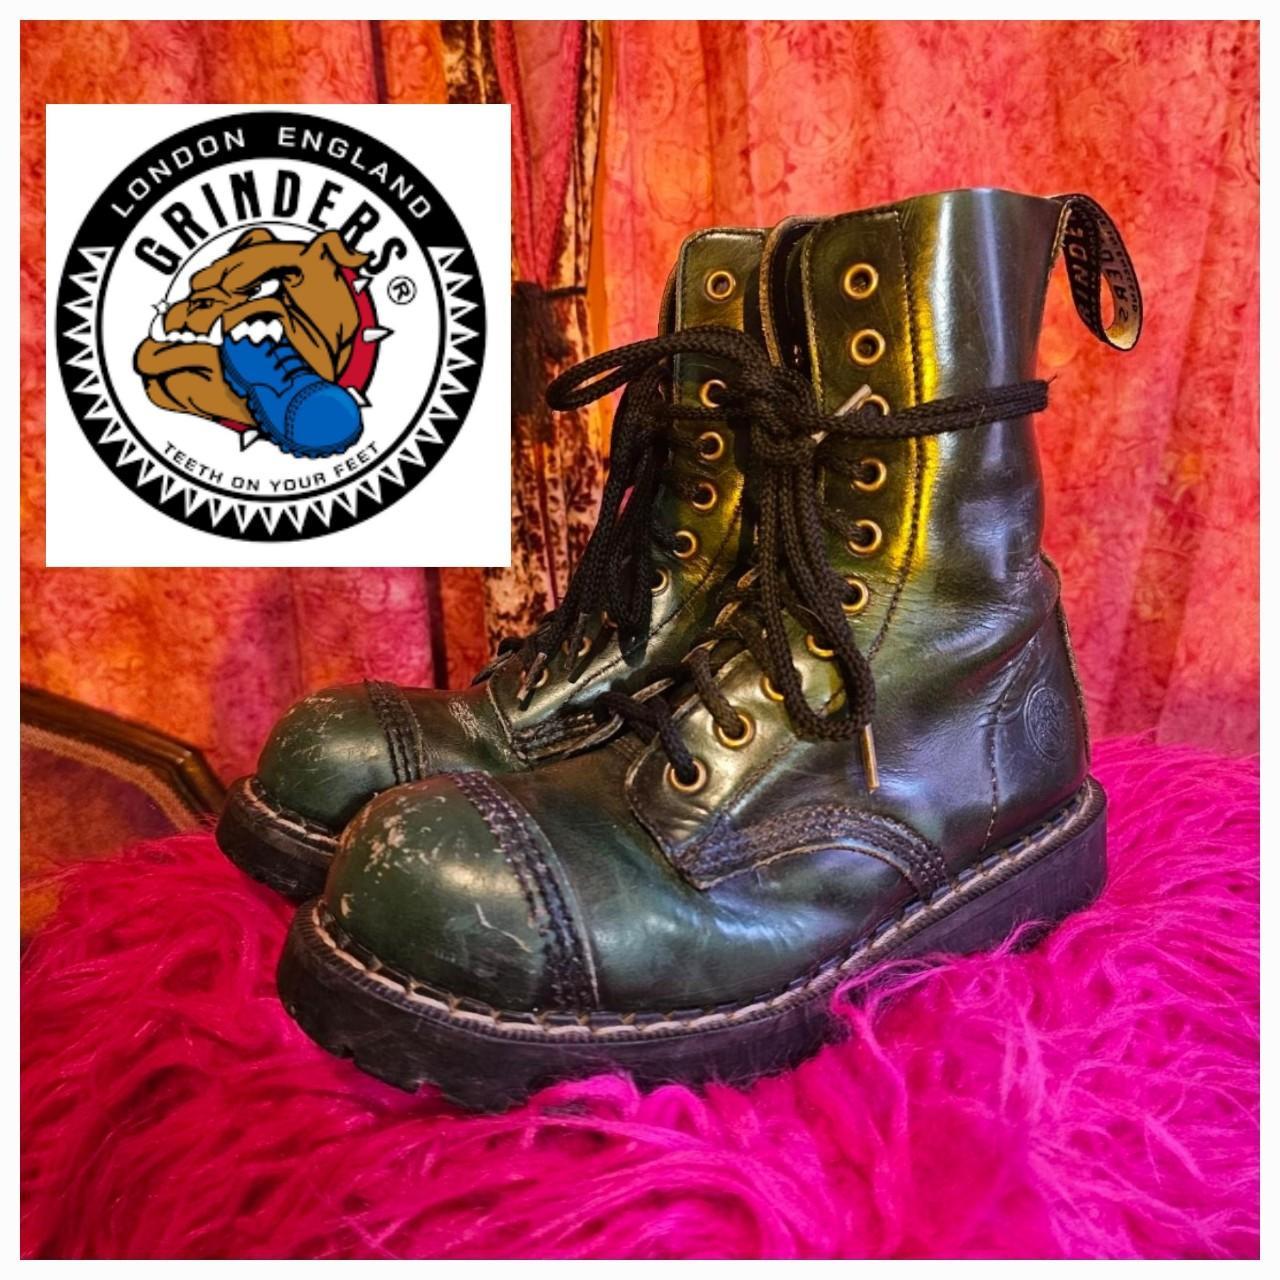 80-1494) Silky Toes Women's Rain Boot Sz 36 - Depop